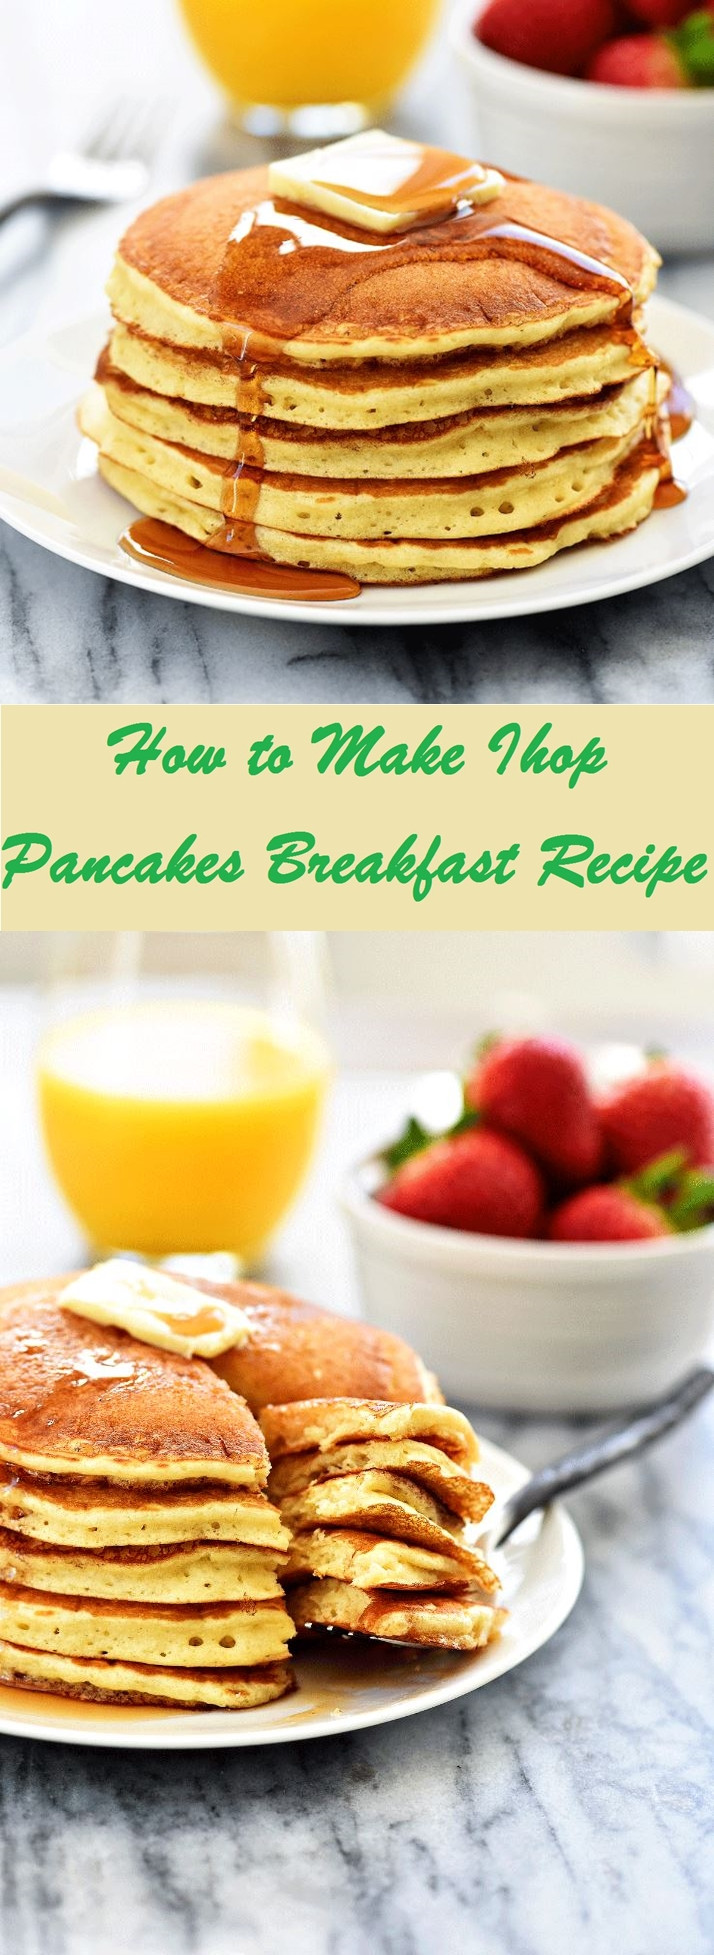 How To Make Ihop Pancakes
 How to Make Ihop Pancakes Breakfast Recipe Health Club